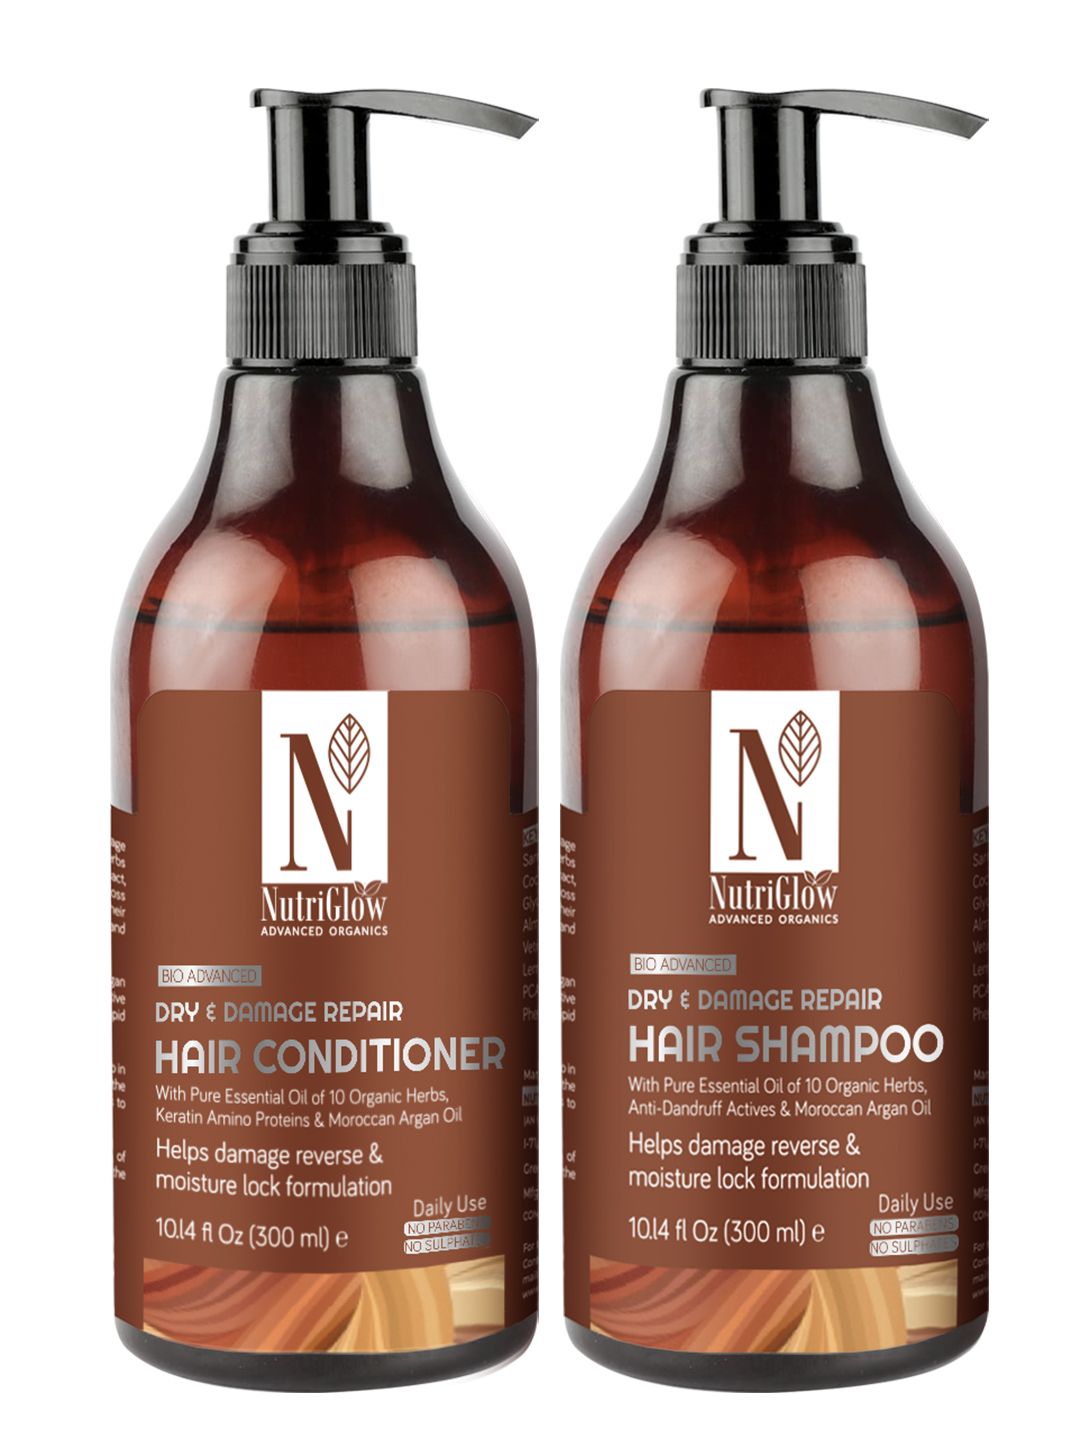 Nutriglow Advanced Organics Dry & Damage Repair Hair Shampoo & Hair Conditioner 300ml Each Price in India